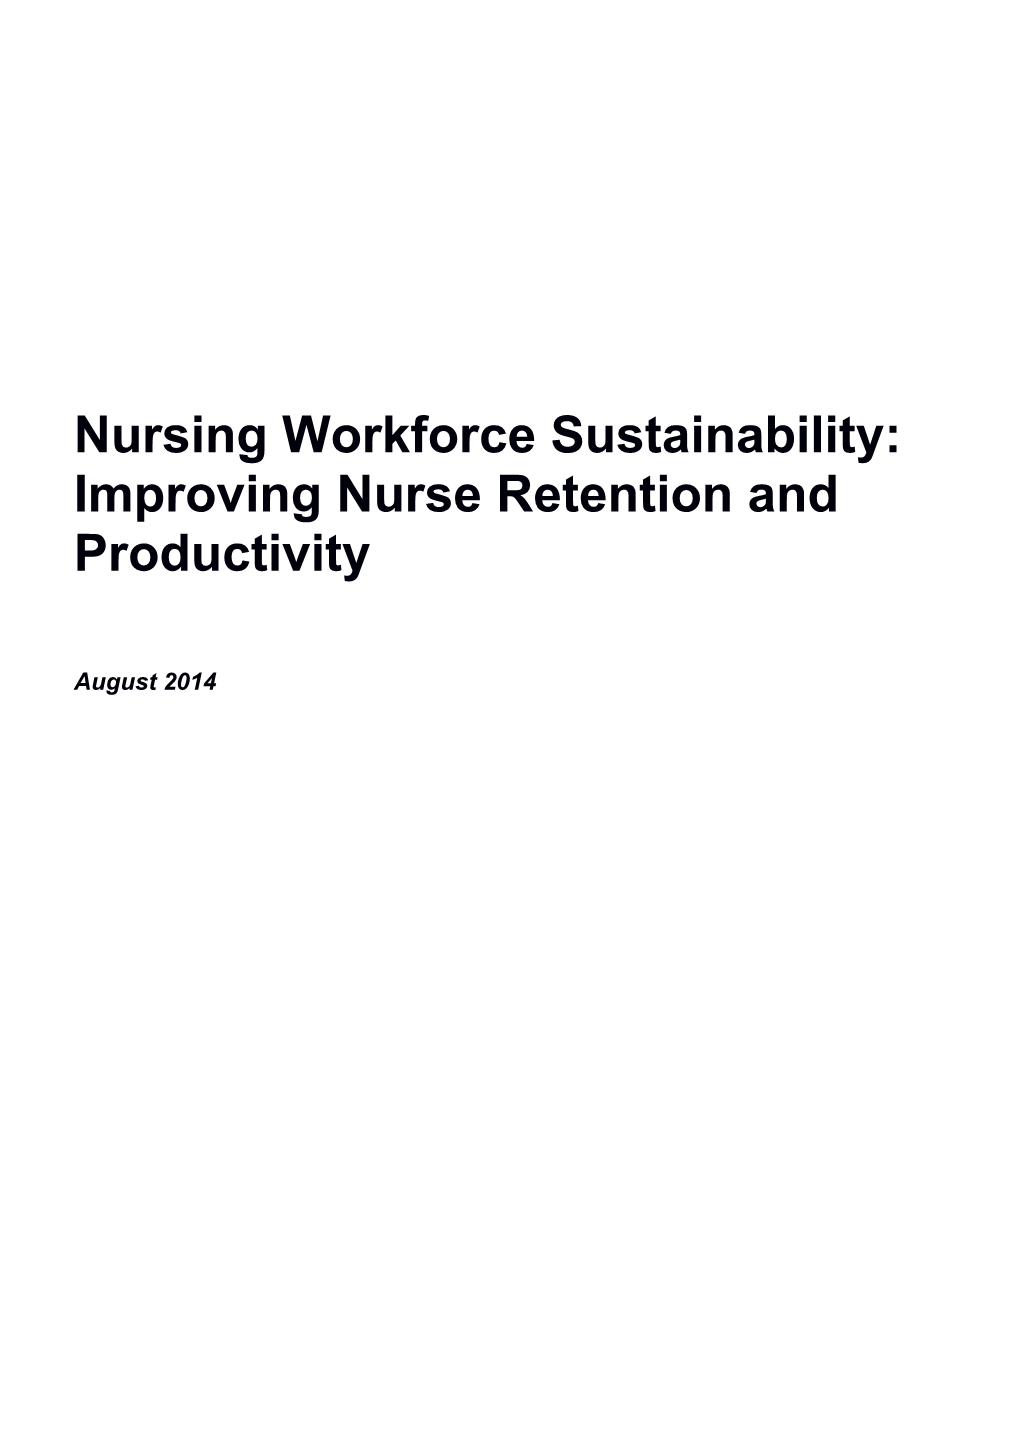 Nursing Workforce Sustainability: Improving Nurse Retention and Productivity